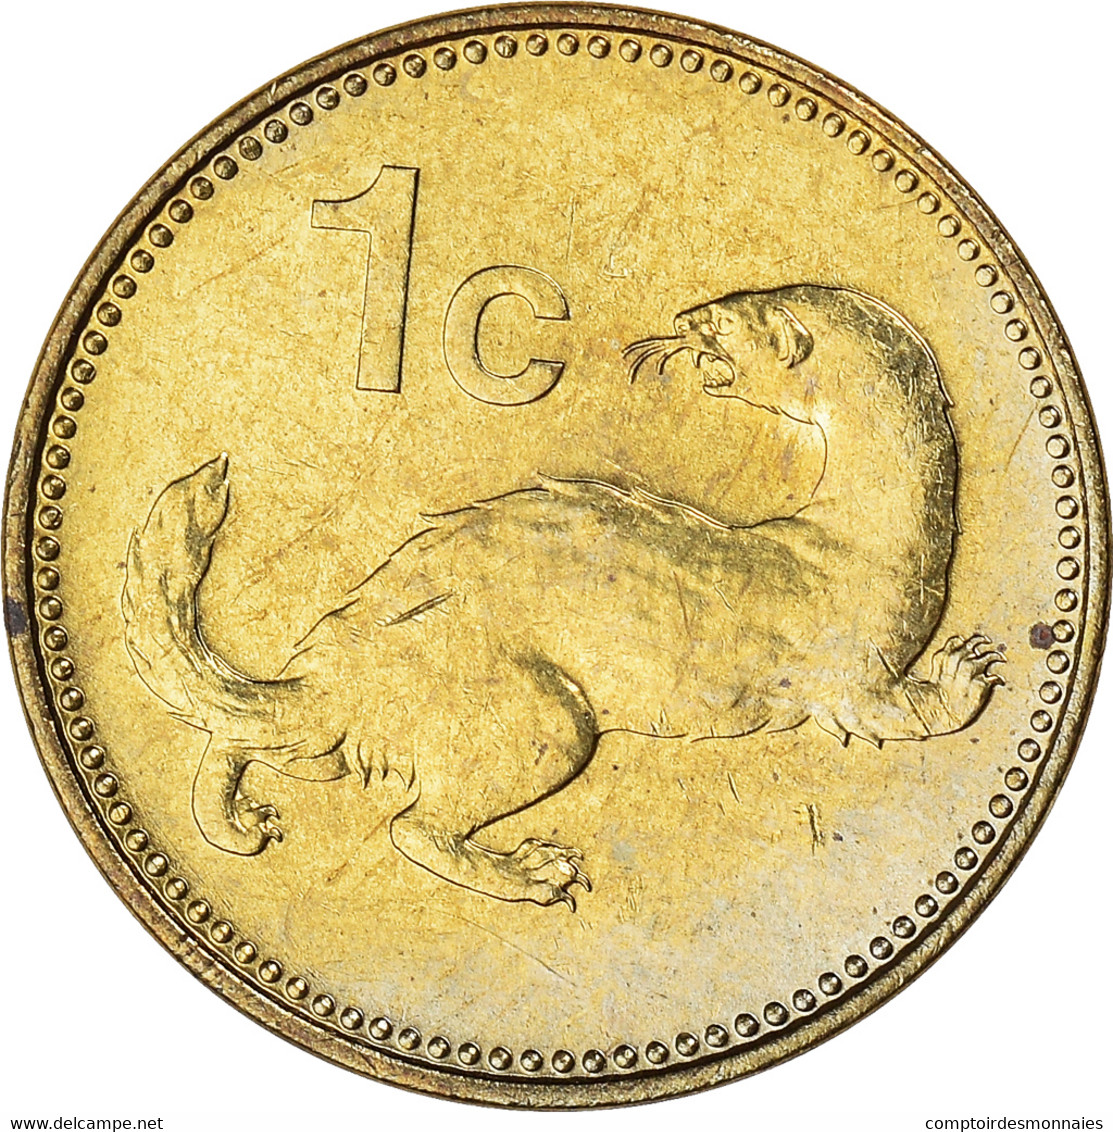 Monnaie, Malte, Cent, 1986, SUP+, Nickel-Cuivre, KM:78 - Malta, Sovr. Mil. Ordine Di